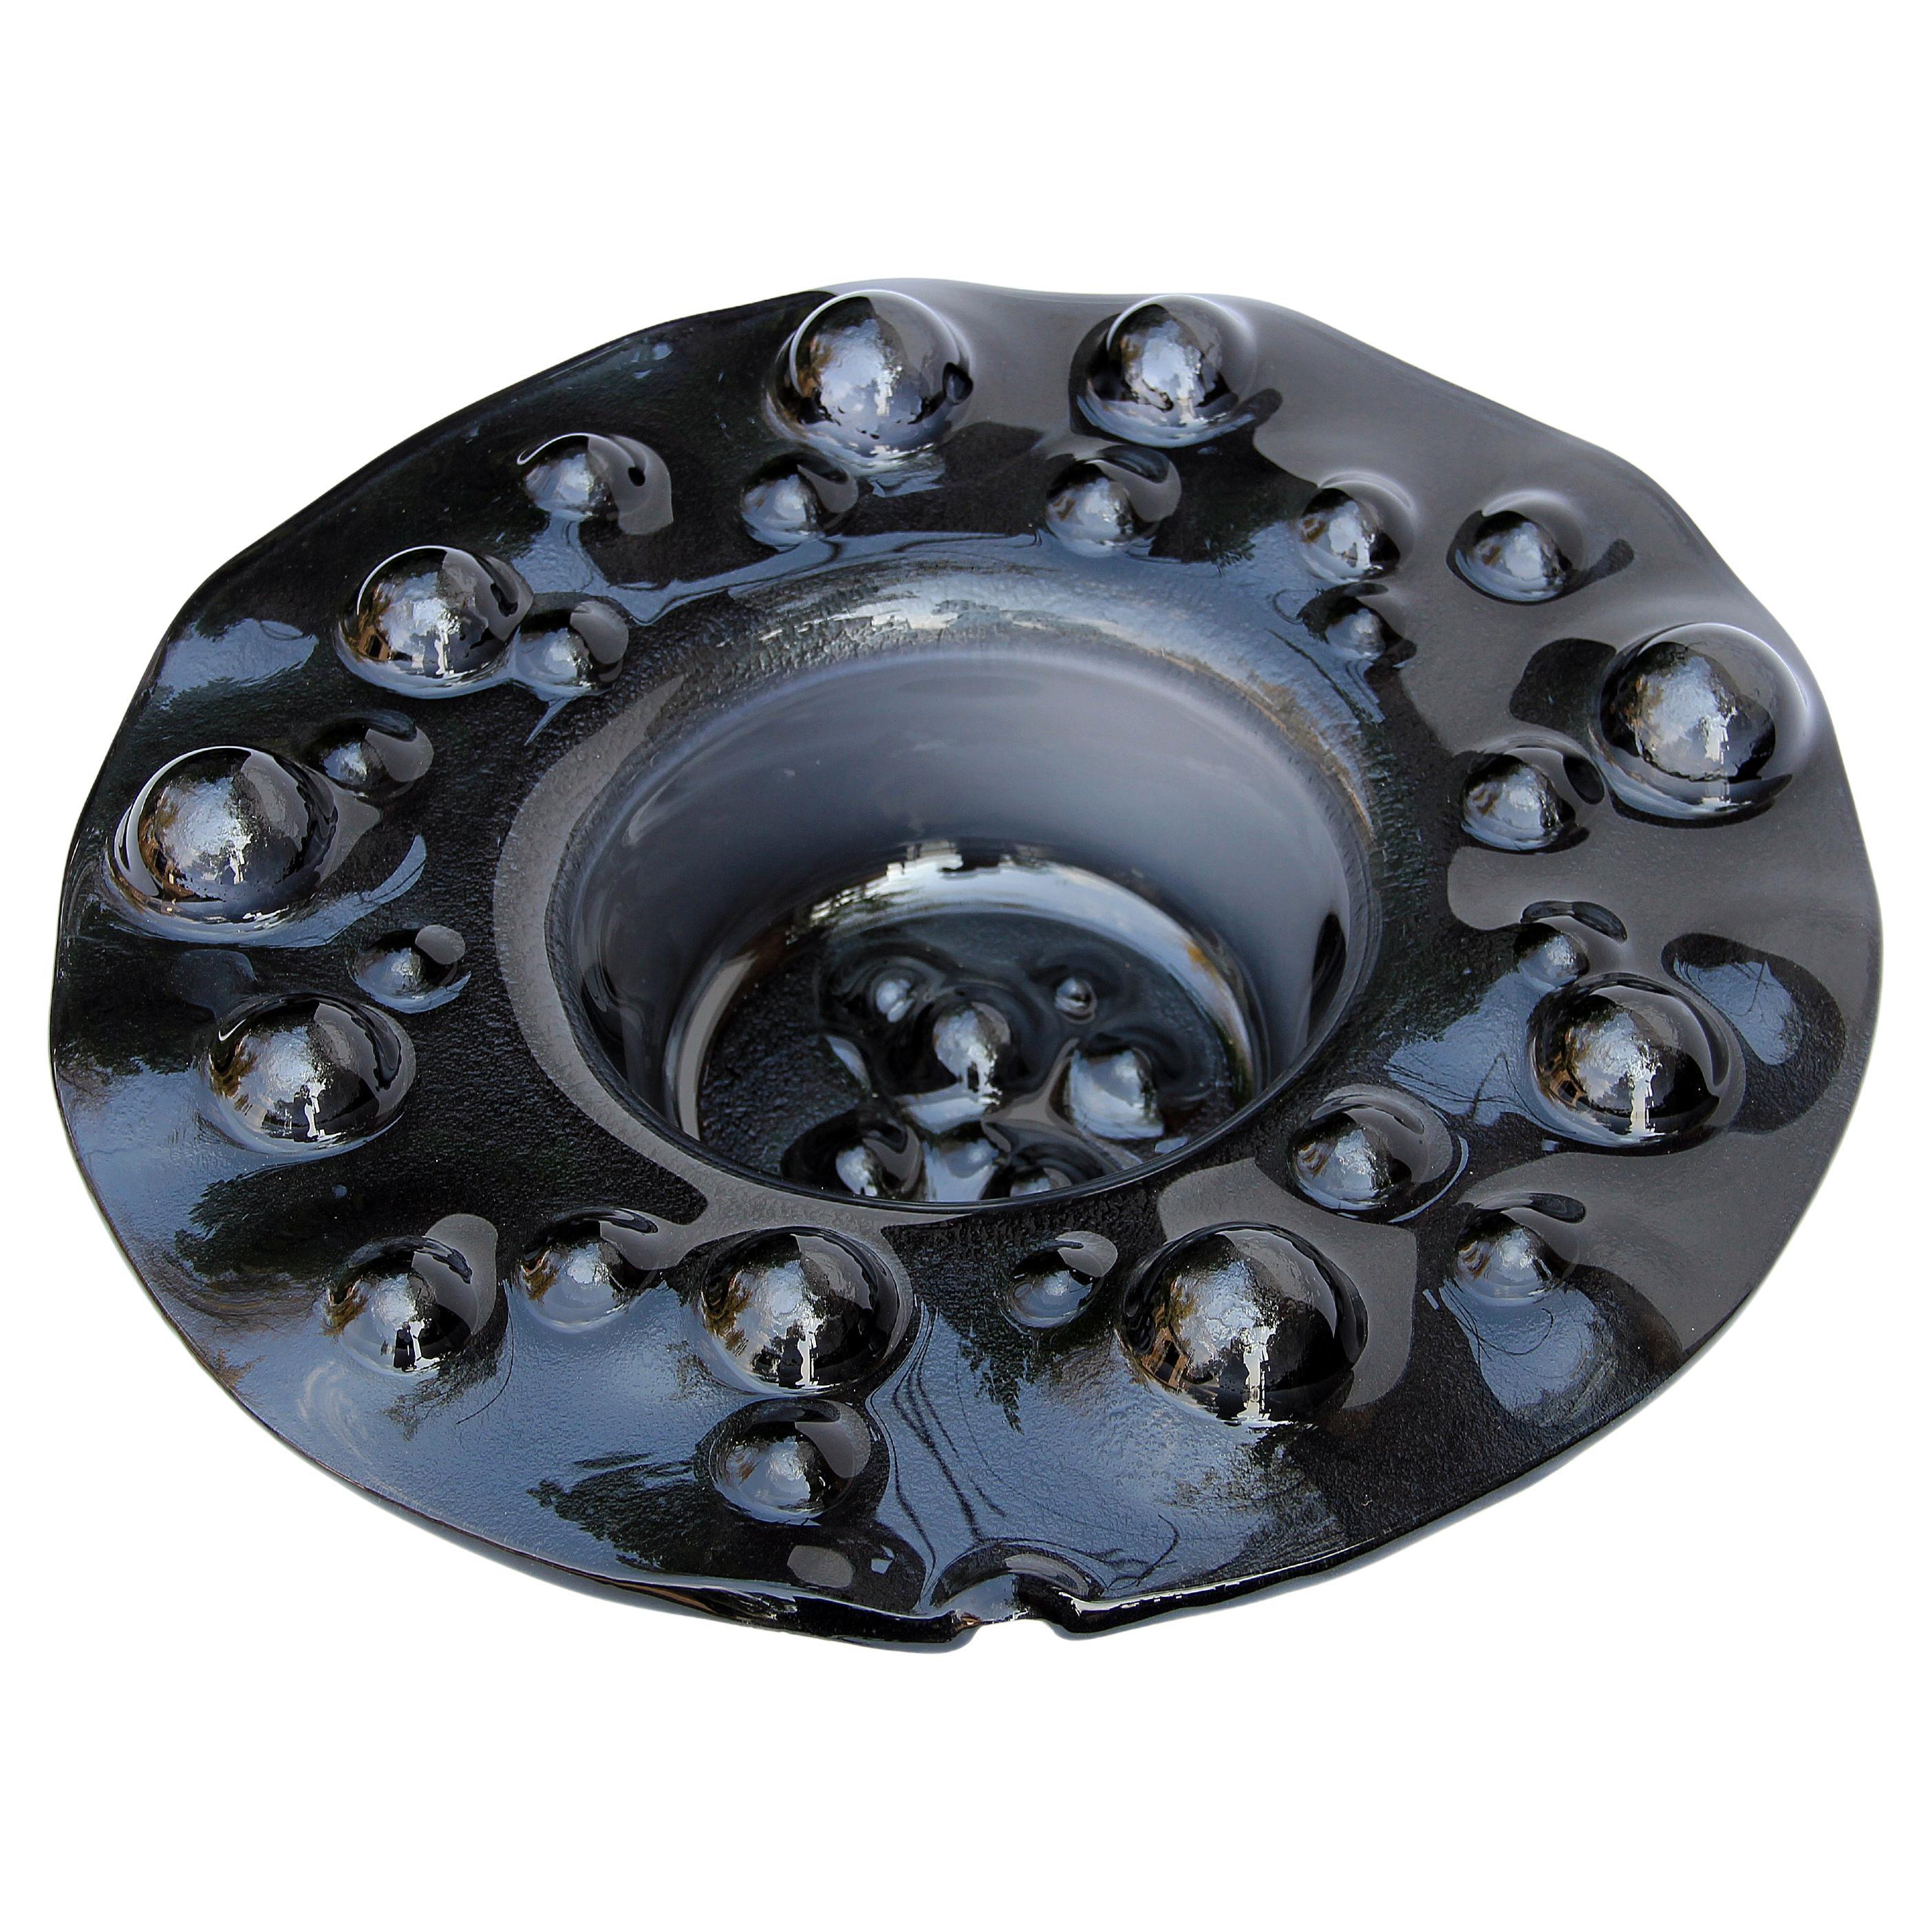 Plus Object glass bowl "Geyser" Black For Sale